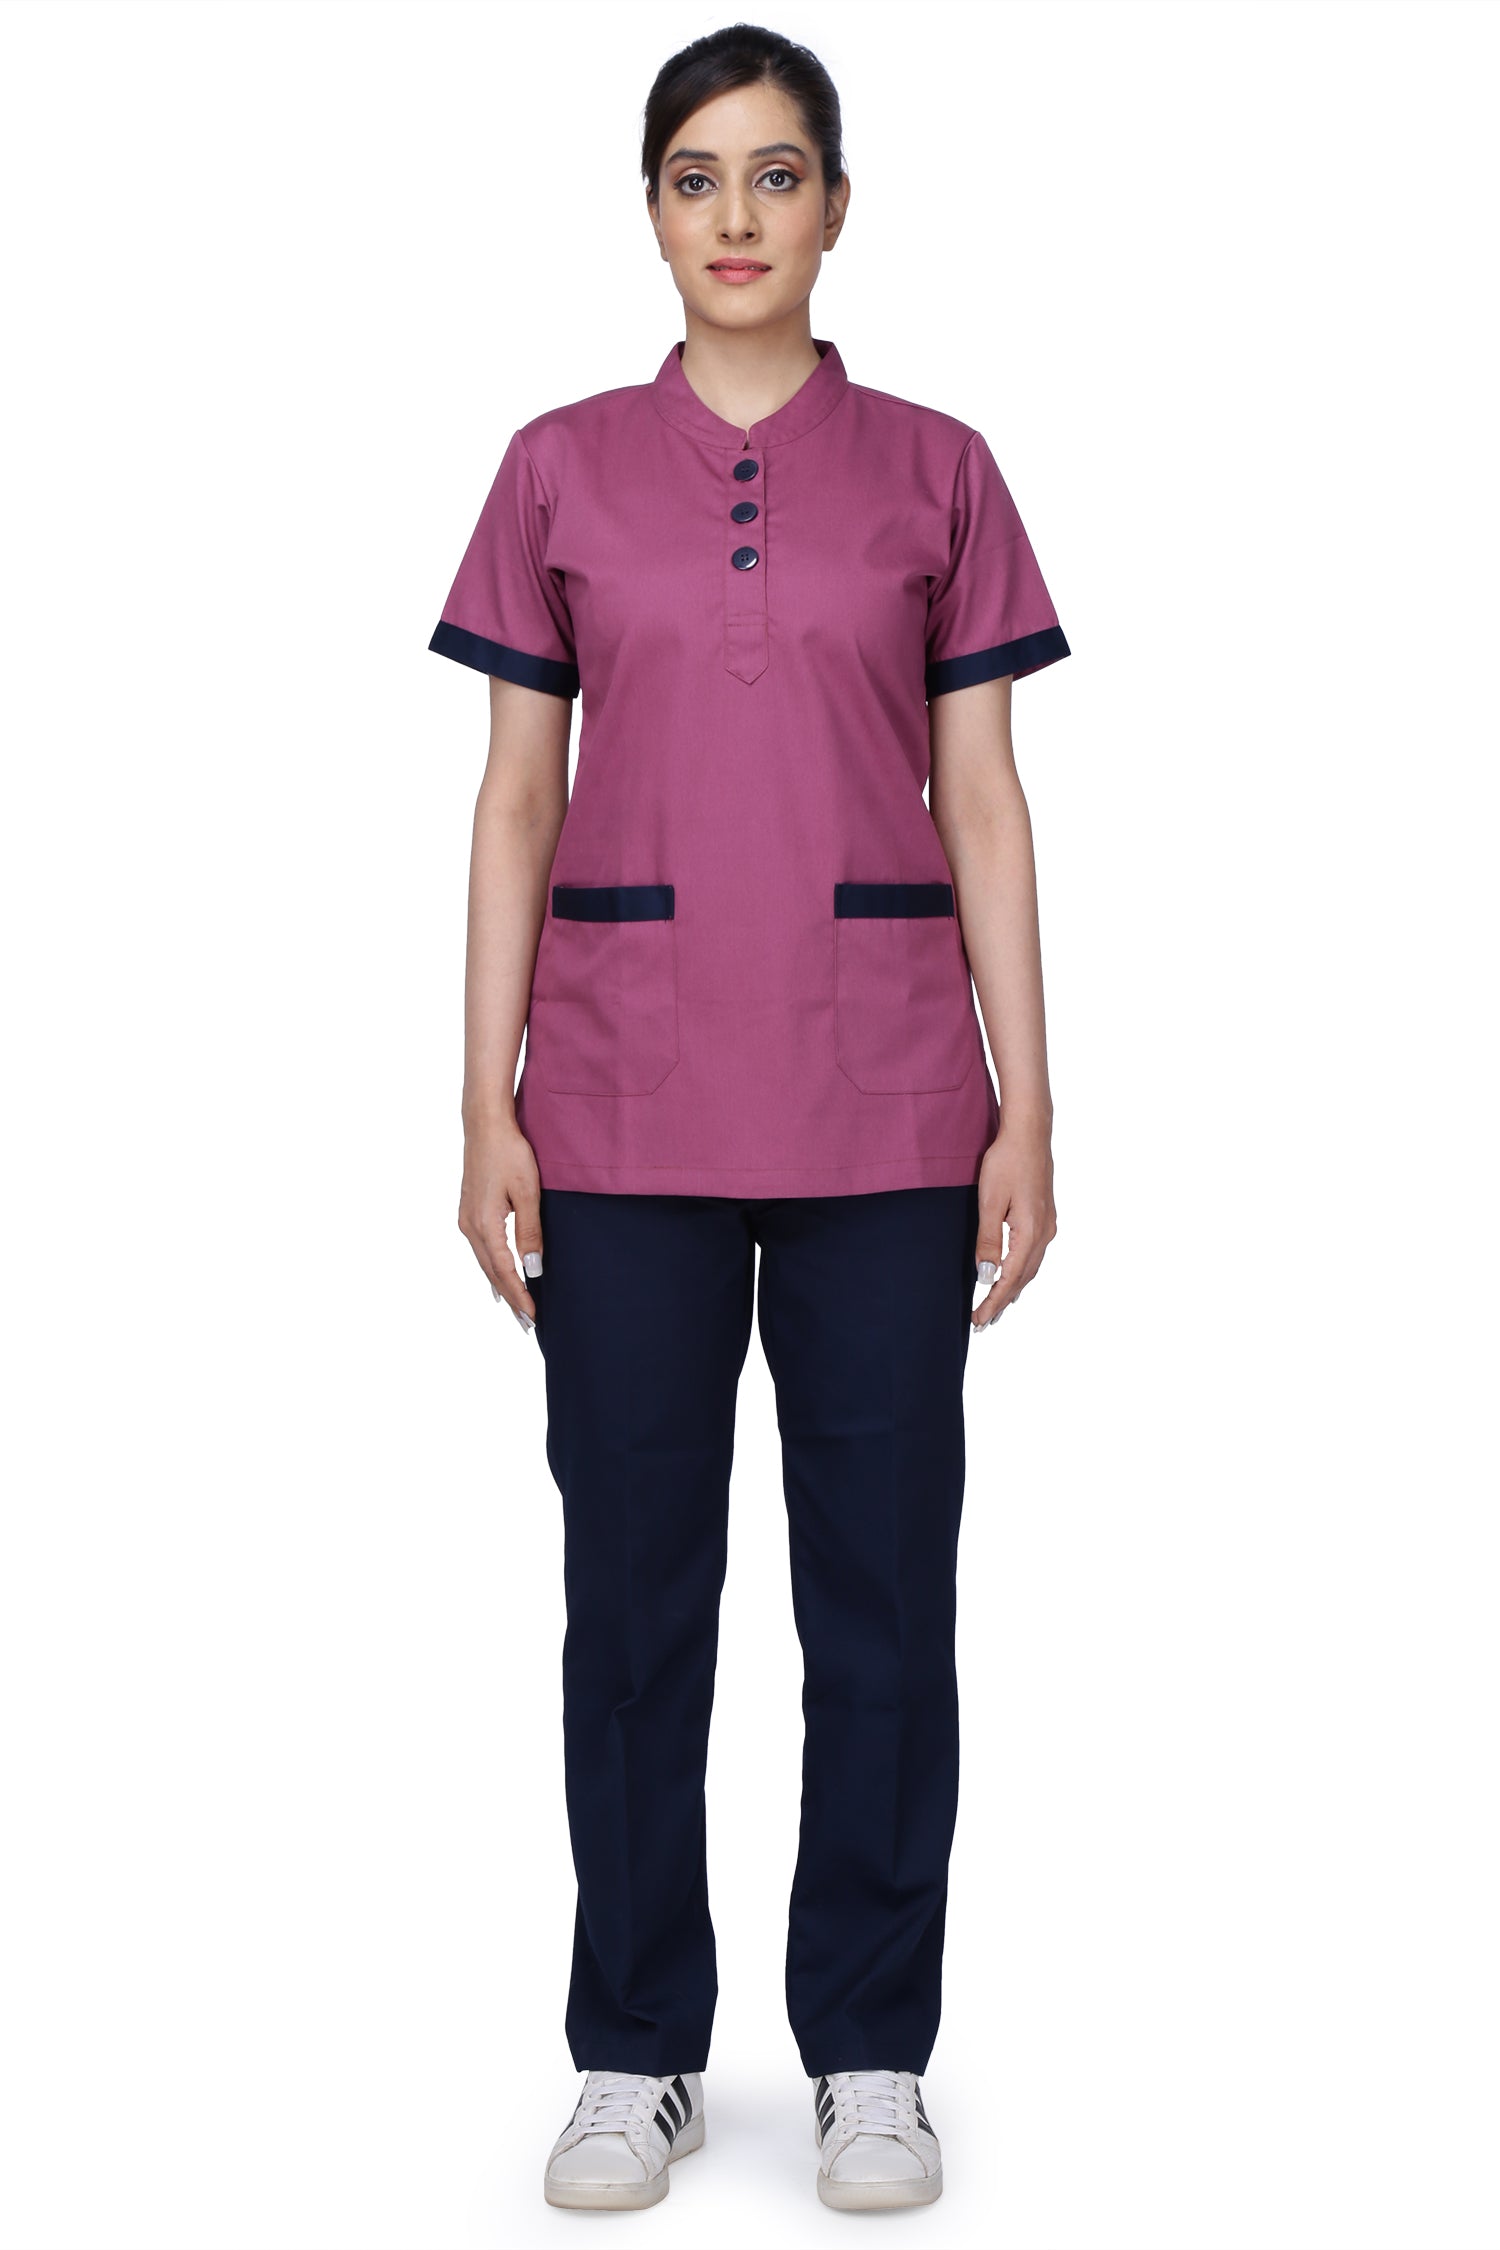 Female Nurse Uniform NT06 | Uniform Craft